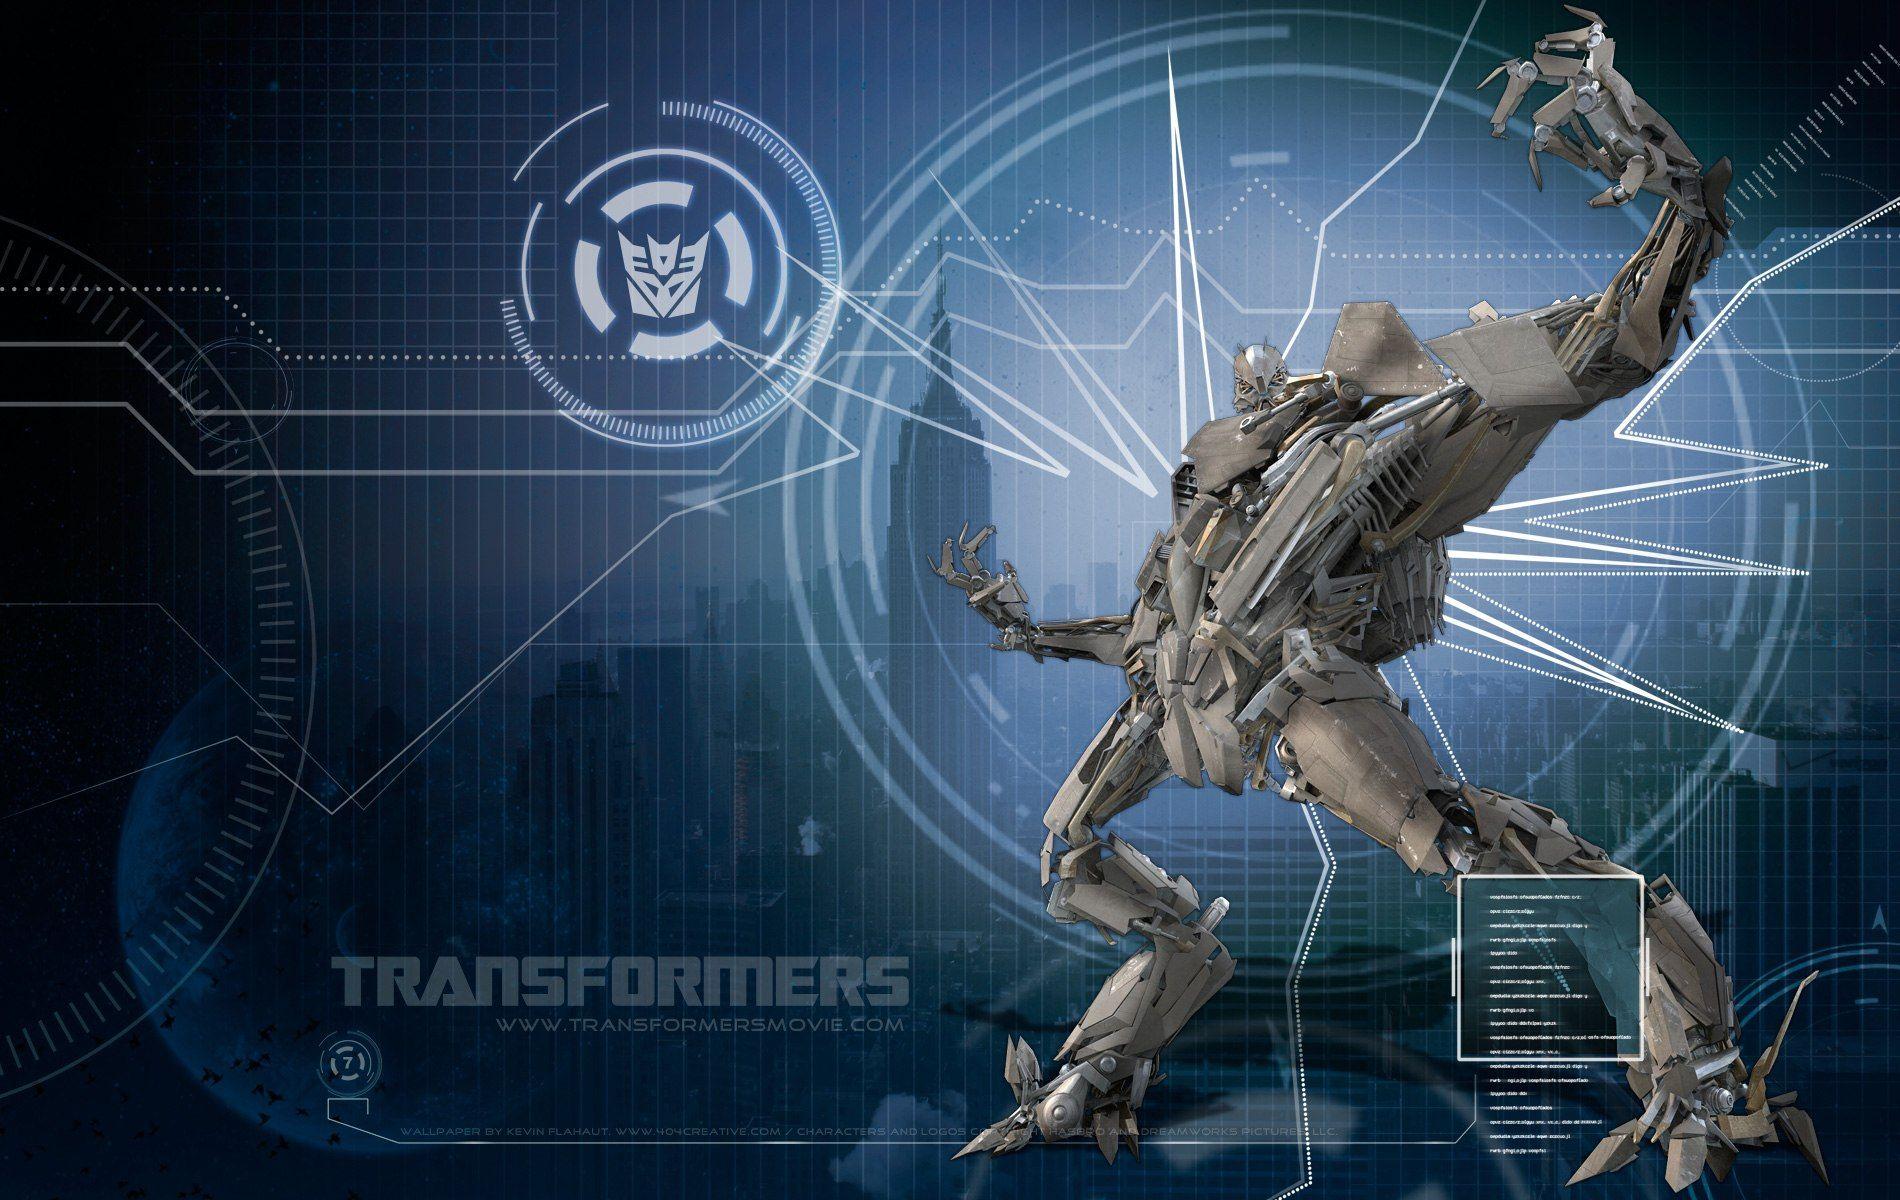 Transformers2 starscream wallpaper. Evolutions